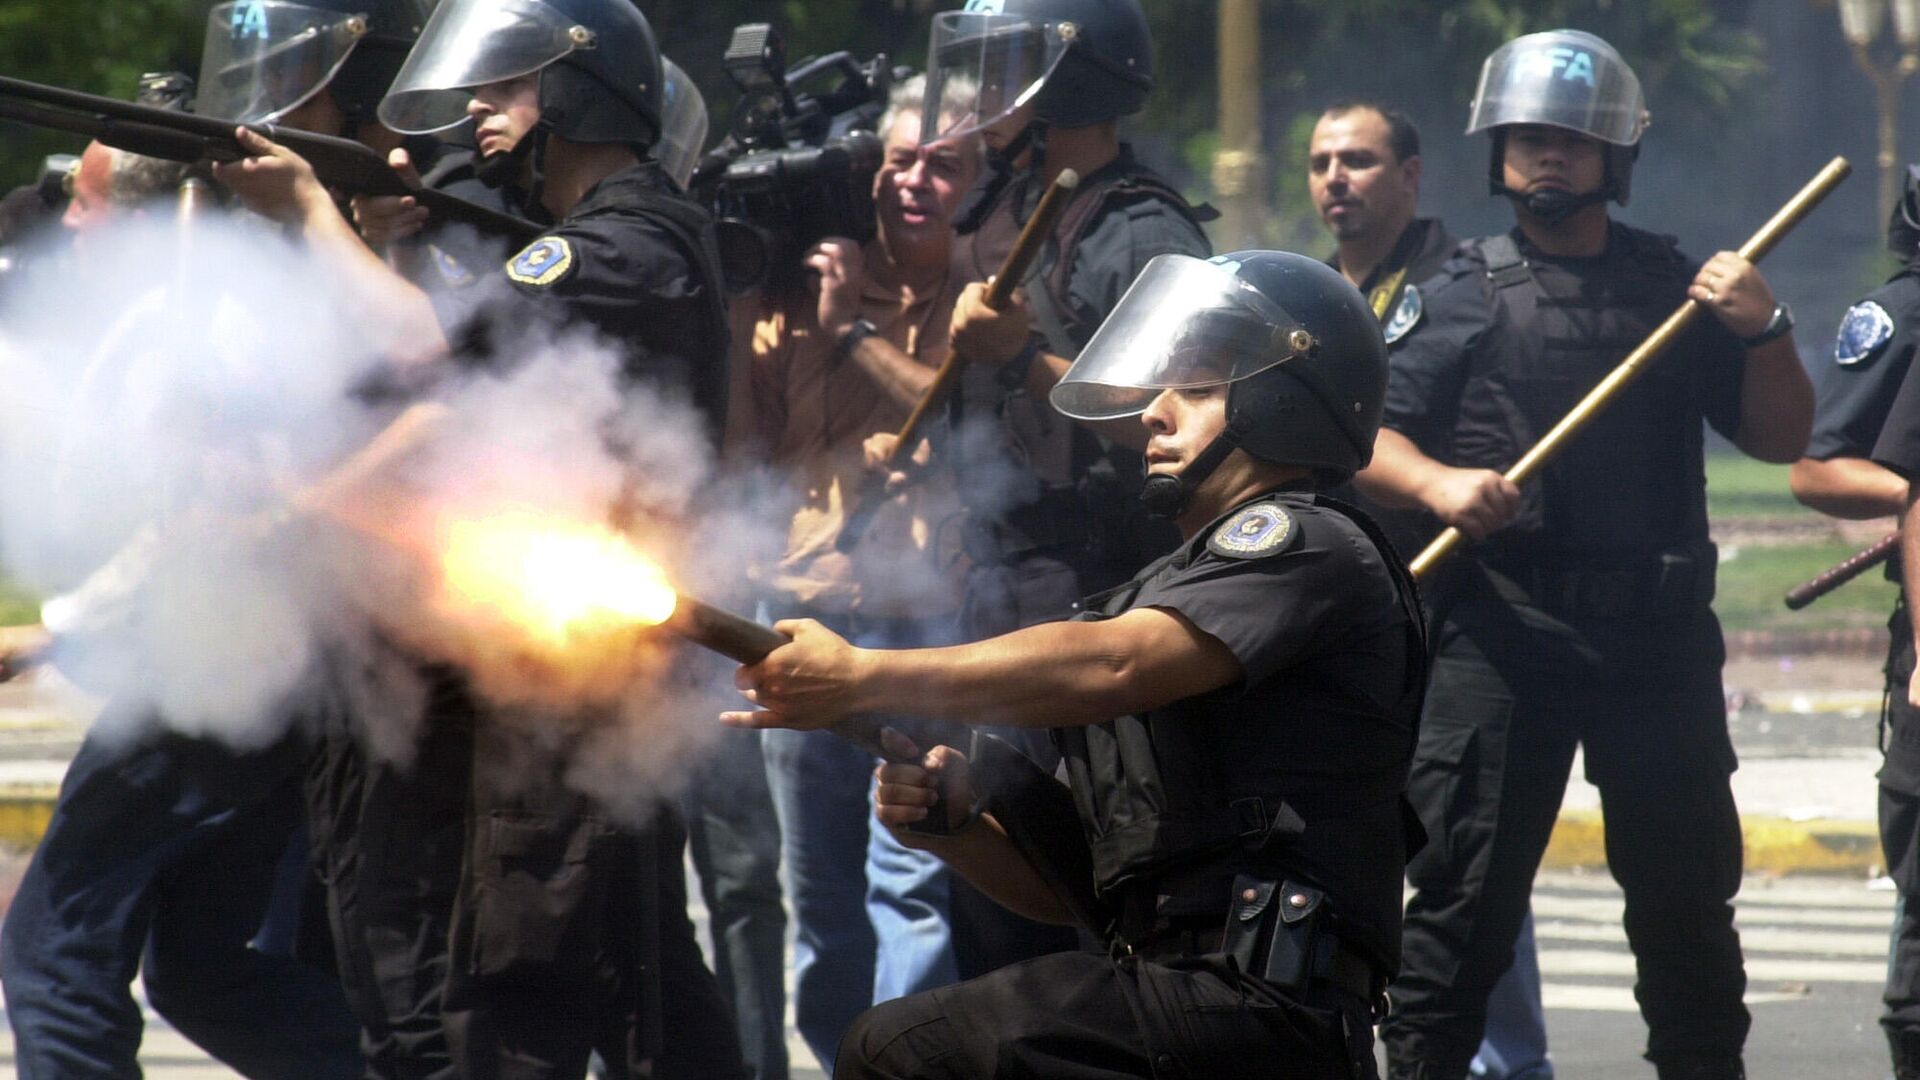 Policía argentina reprime a manifestantes durante el estallido de diciembre de 2001 - Sputnik Mundo, 1920, 18.12.2021